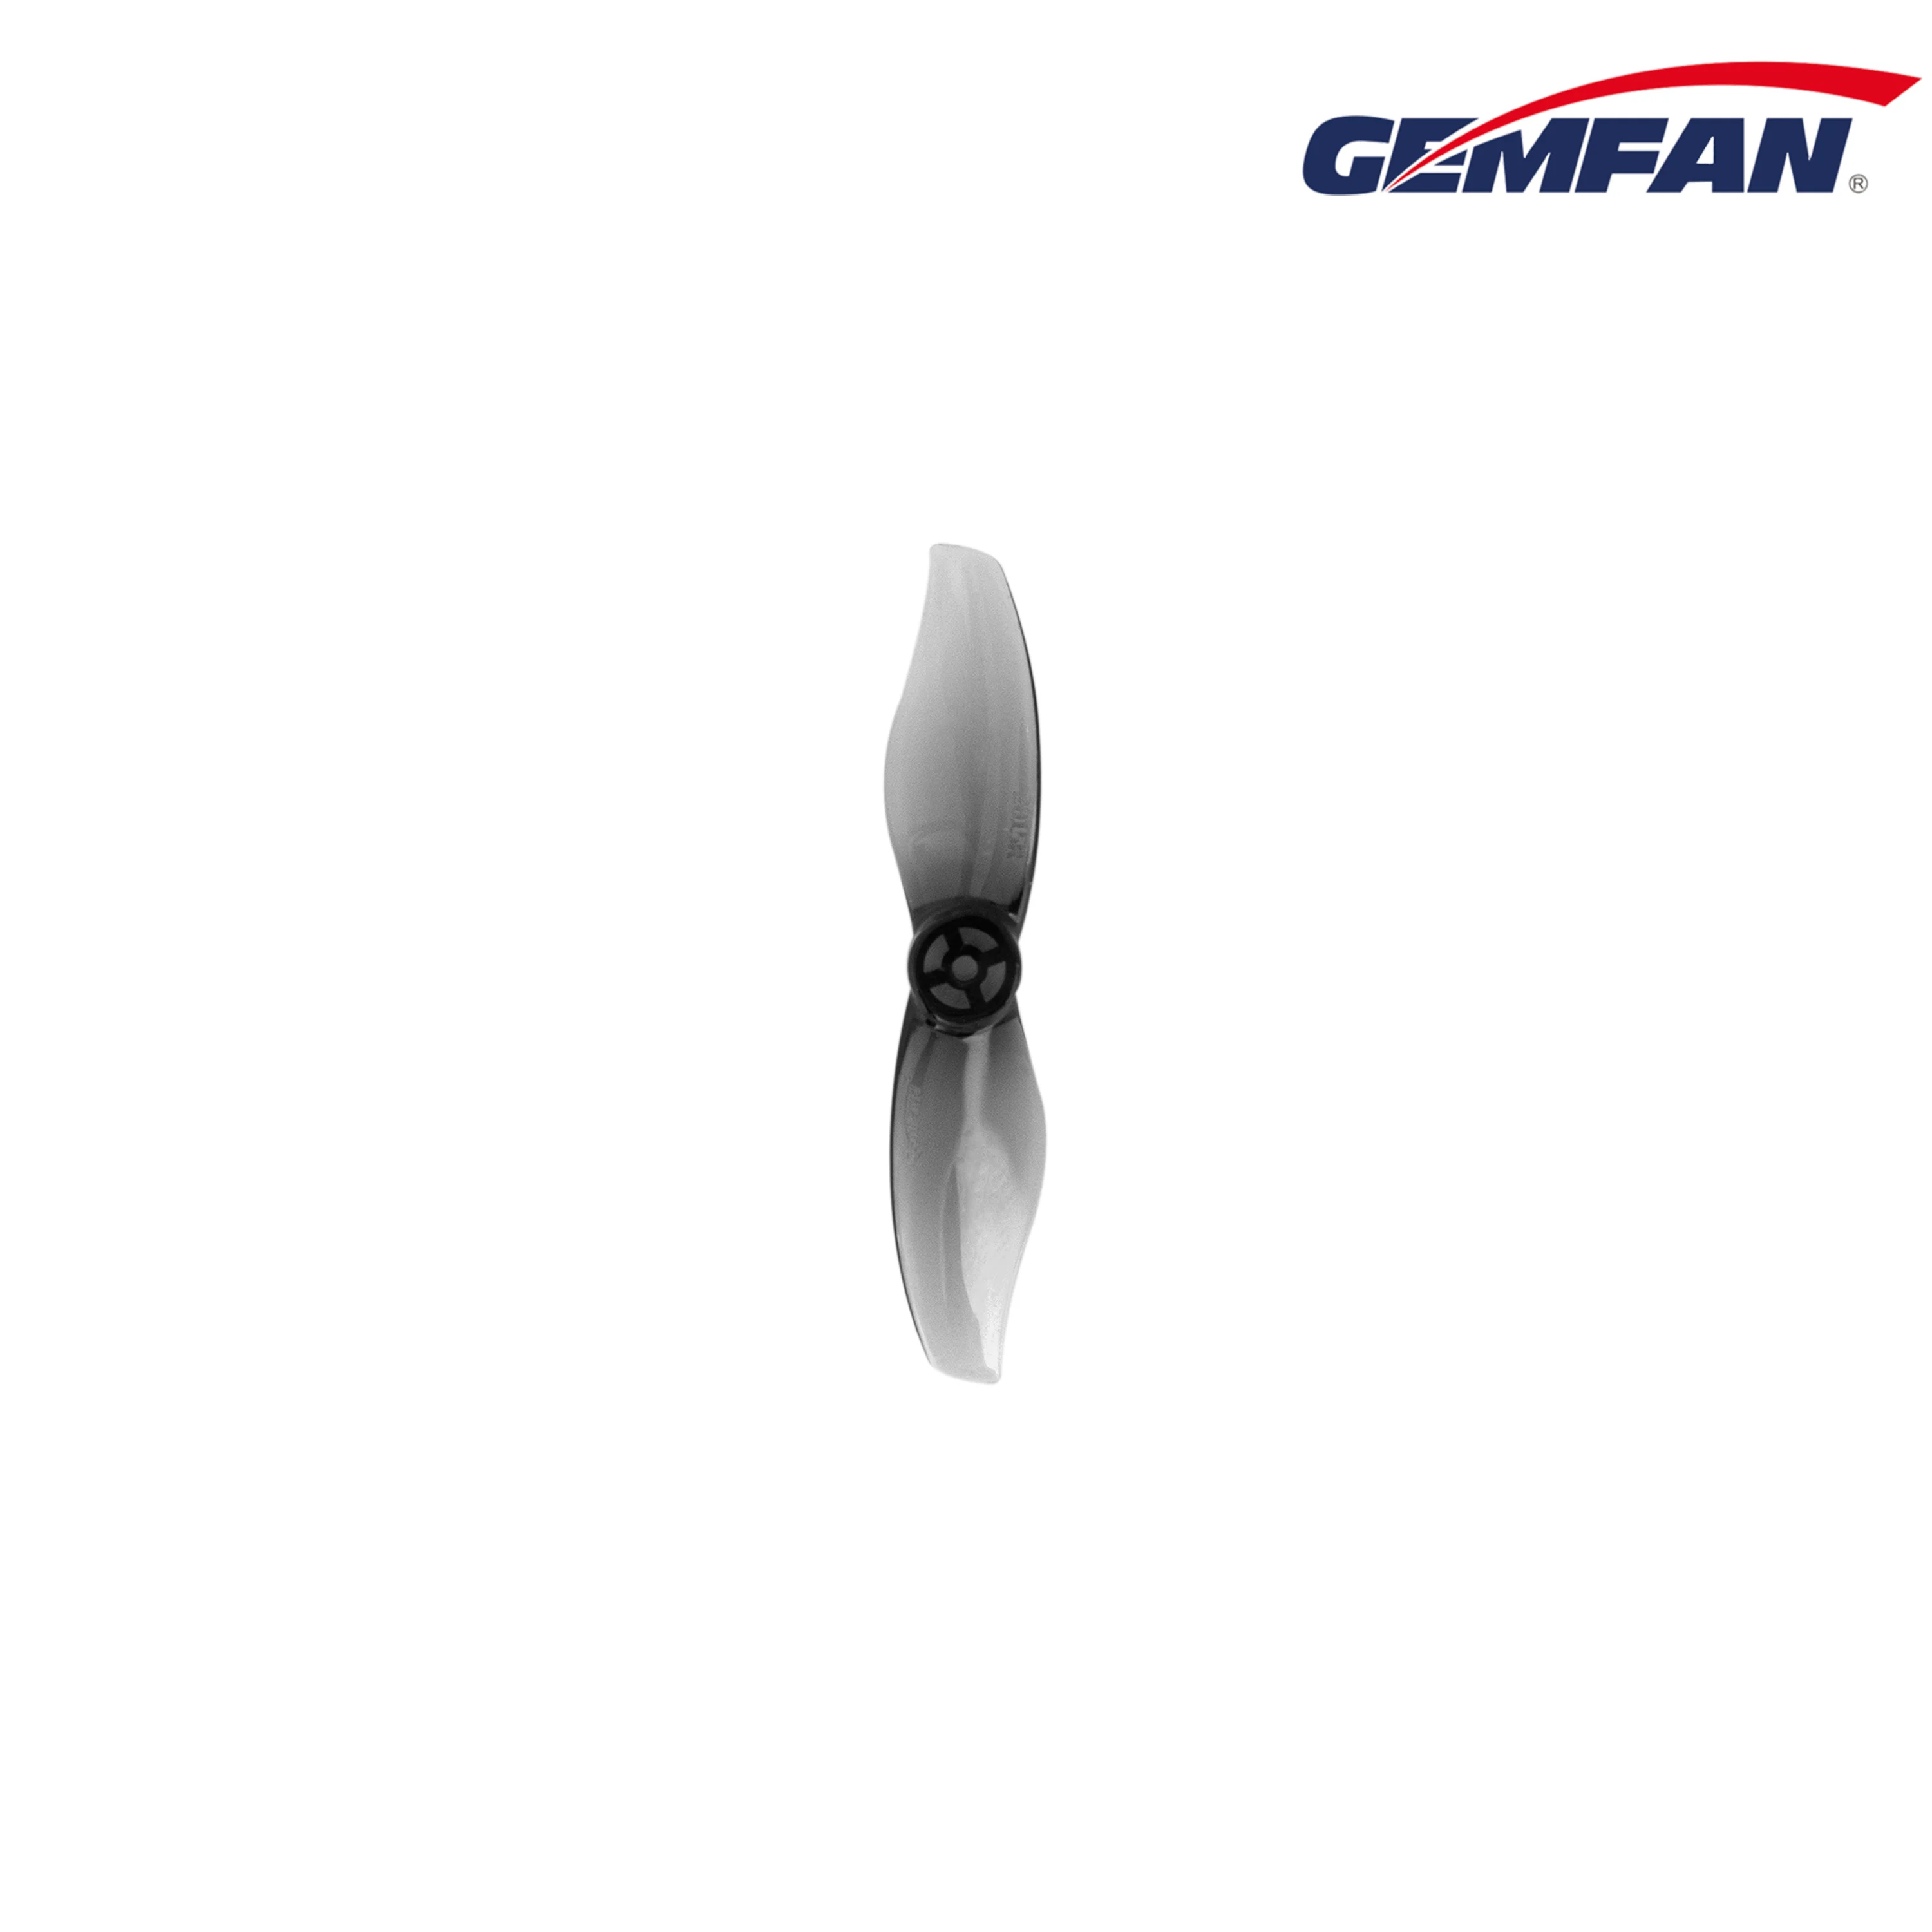 Gemfan Hurricane 2015 2x1.5 2-blade PC Gray 1.5mm propeller